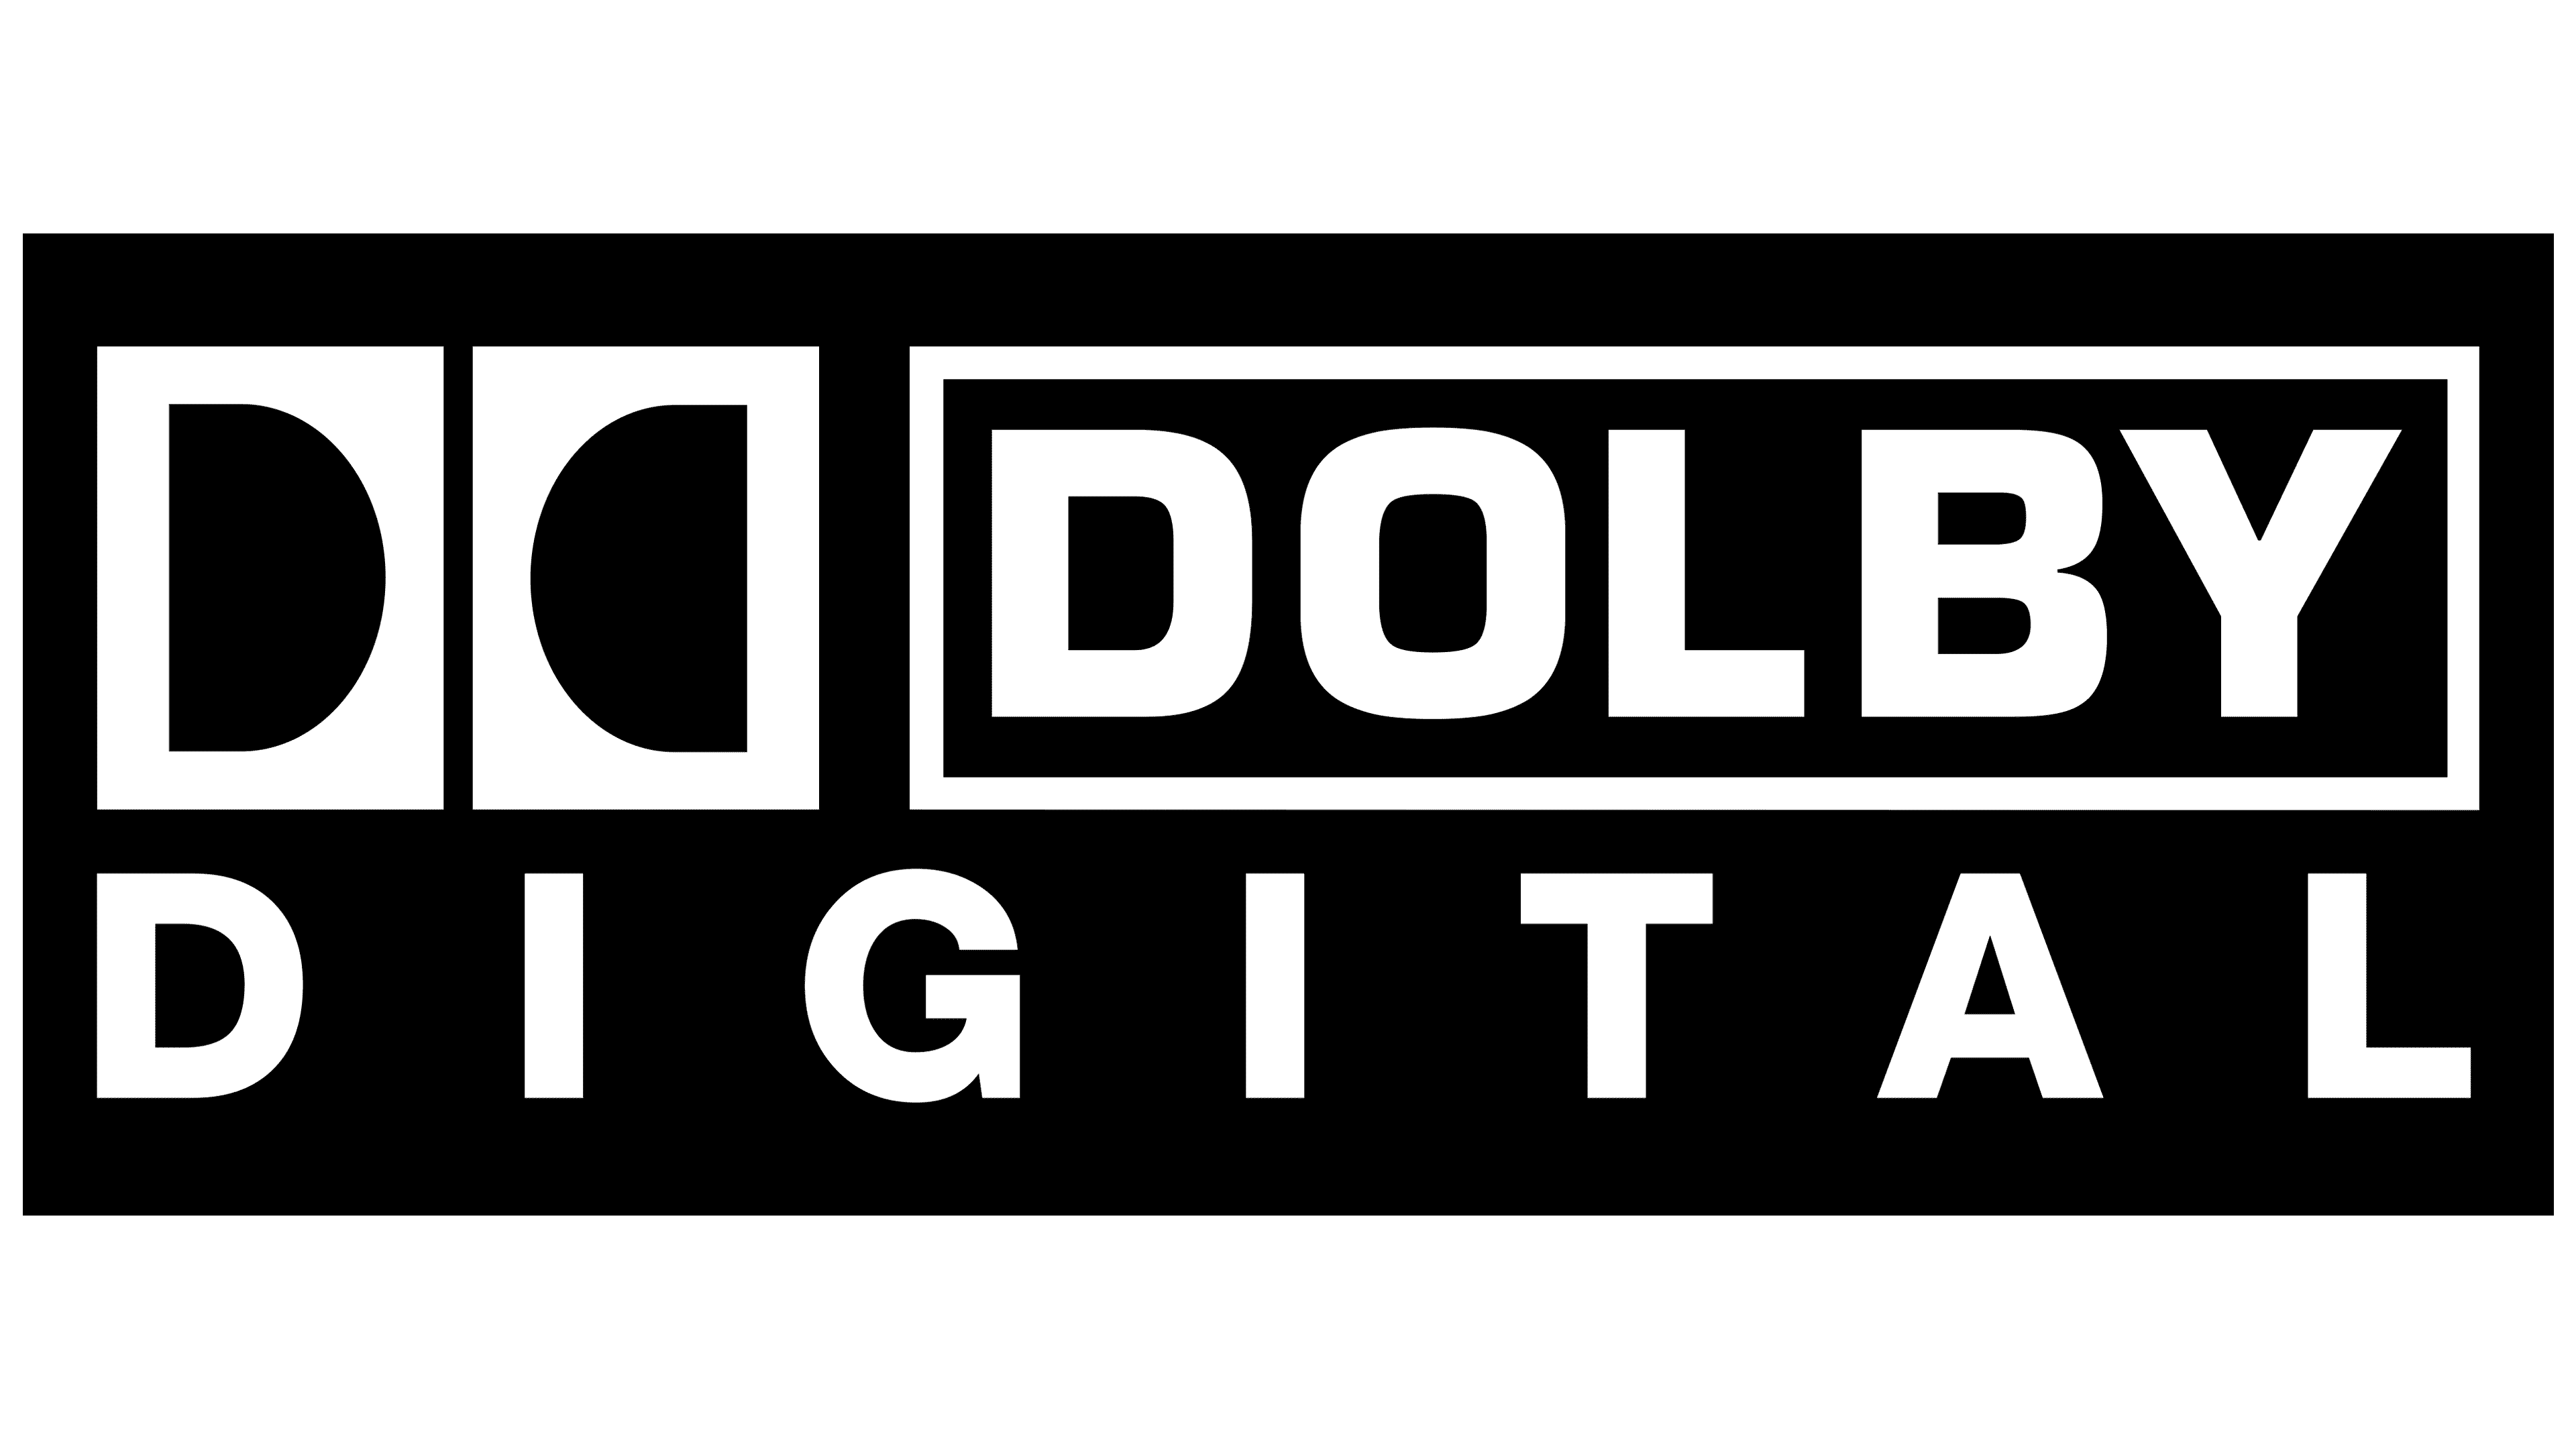 pcm or dolby digital